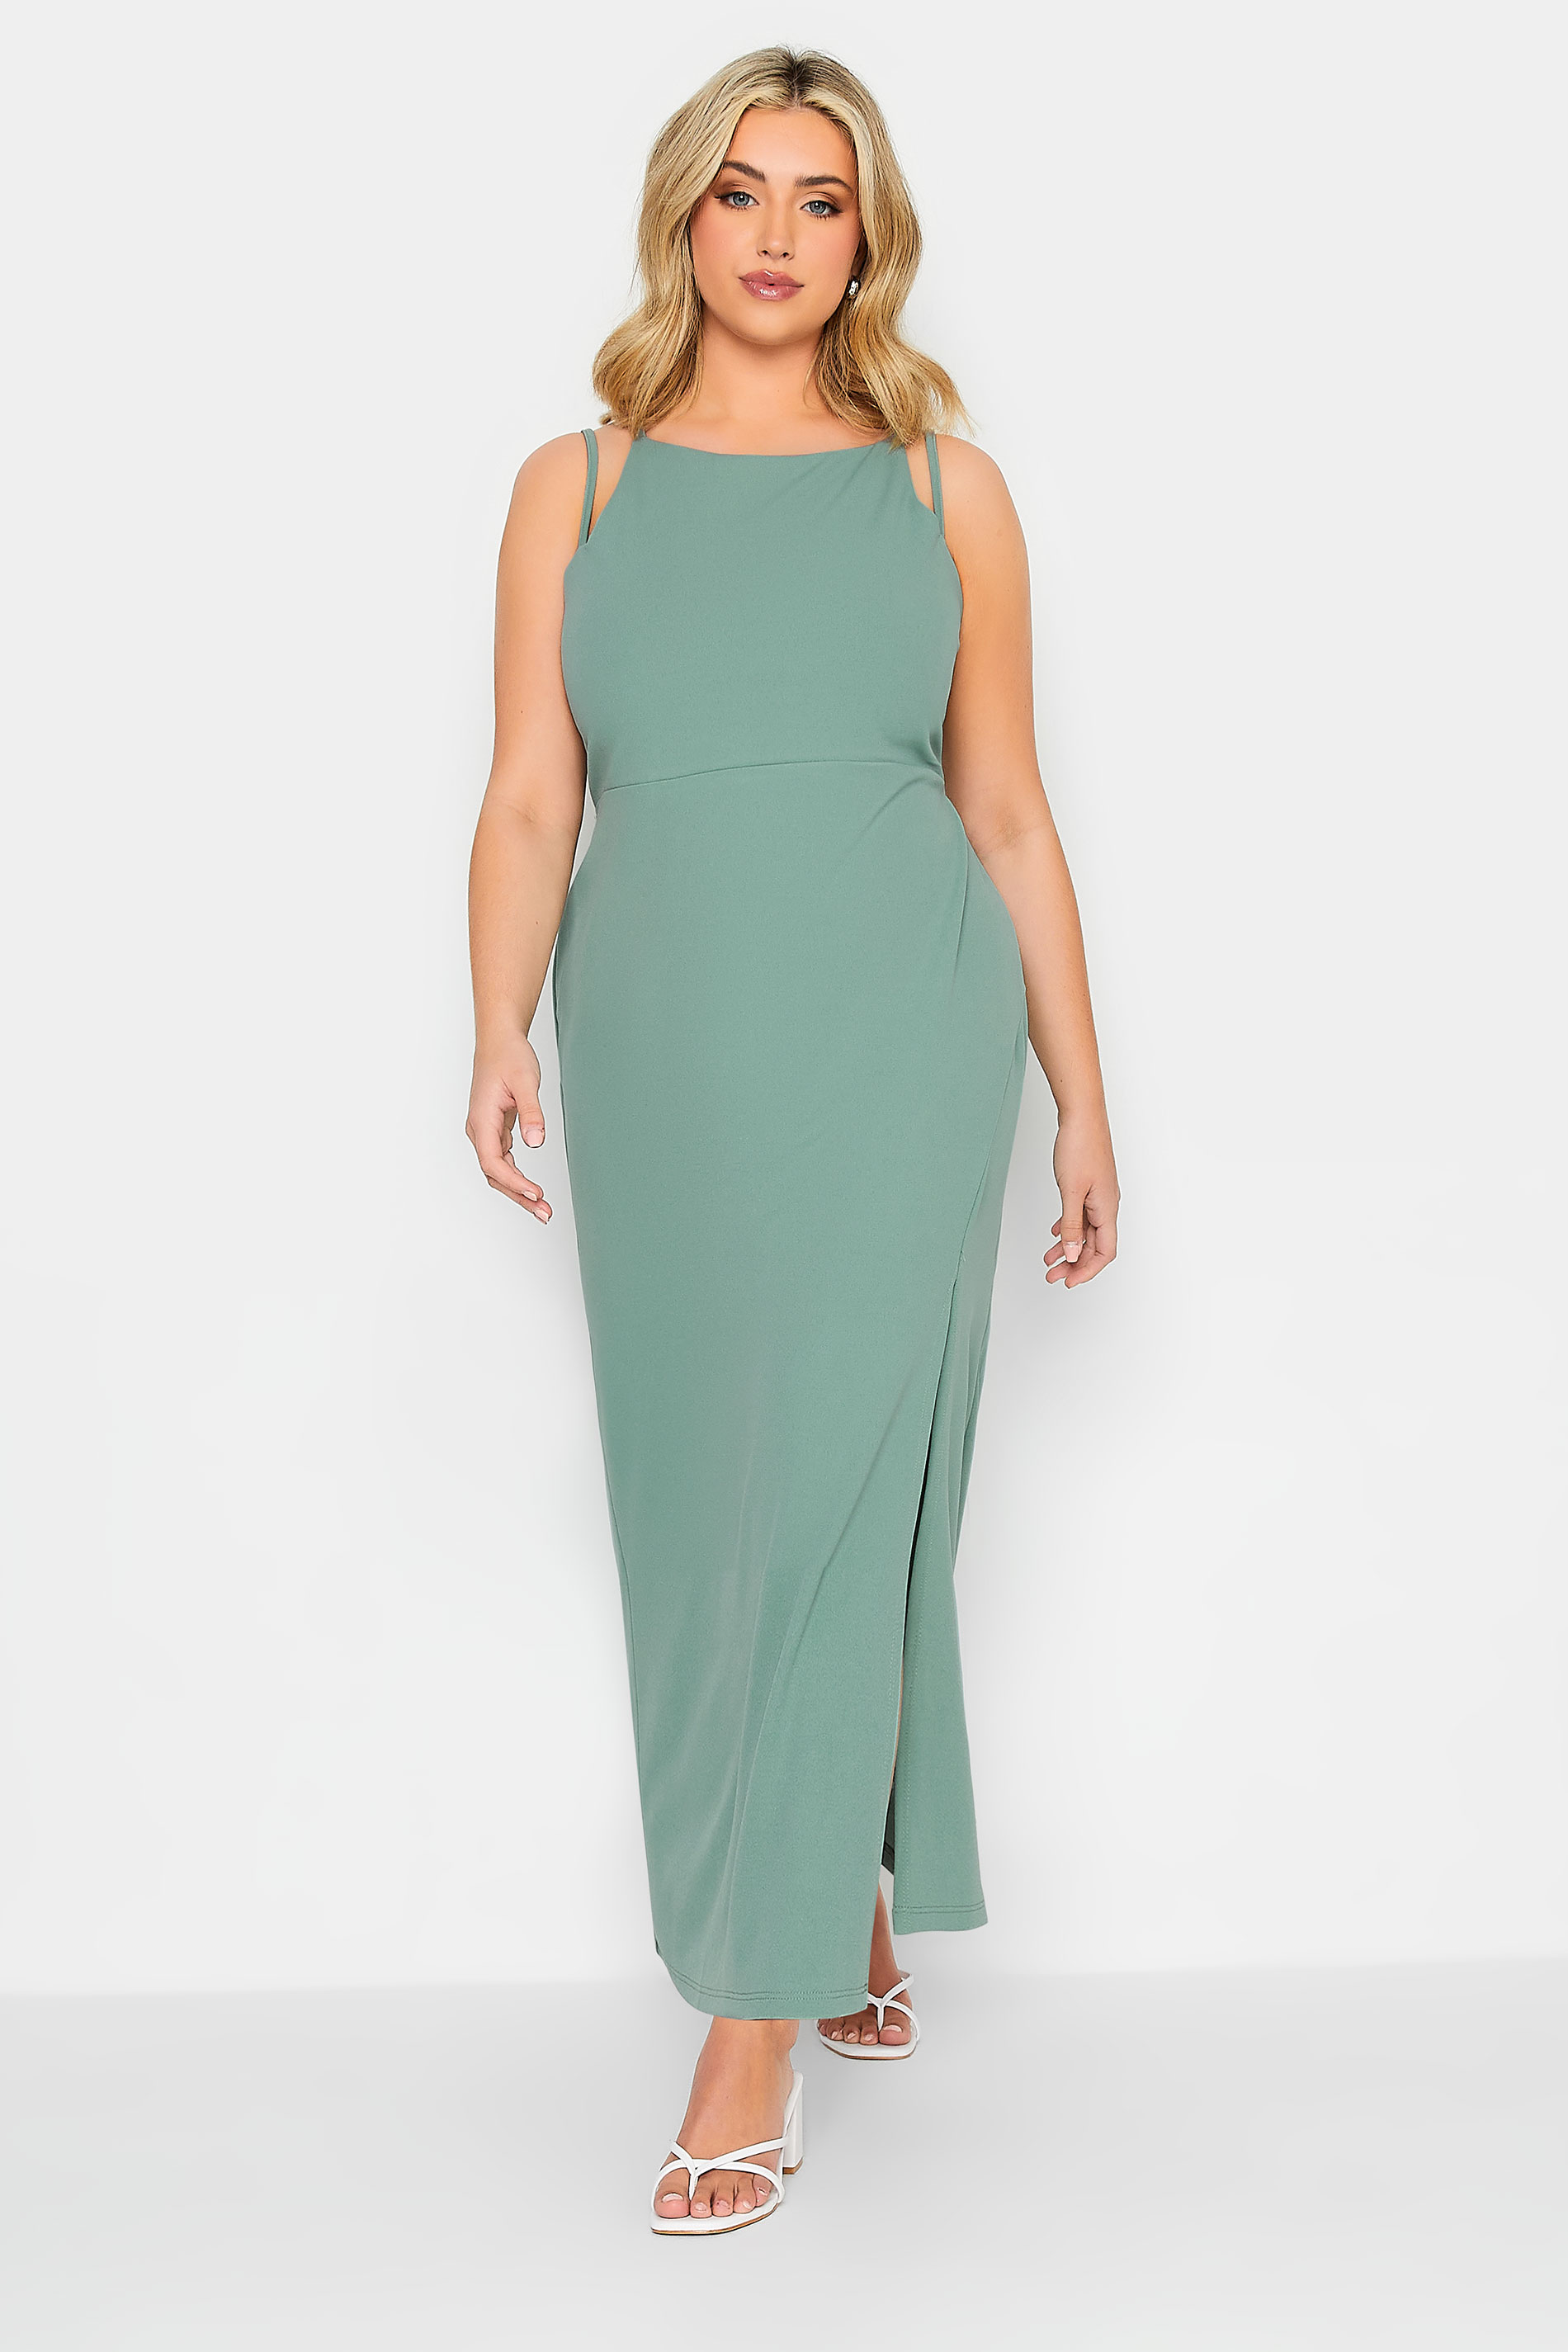 YOURS PETITE Plus Size Sage Green Split Hem Maxi Dress | Yours Clothing